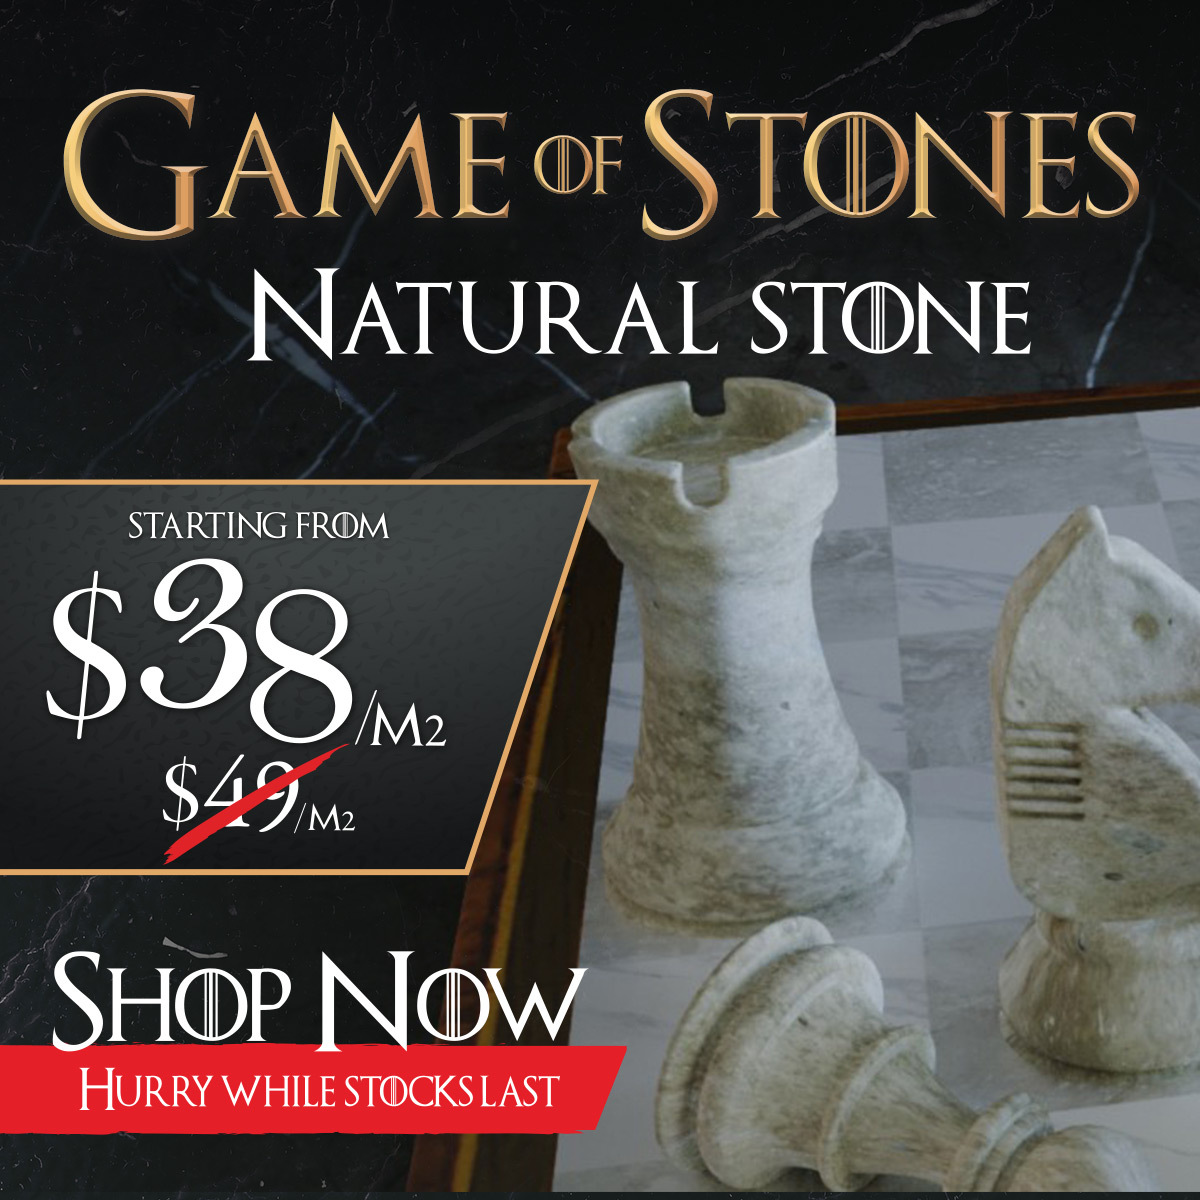 4 Reasons To Buy Natural Stone